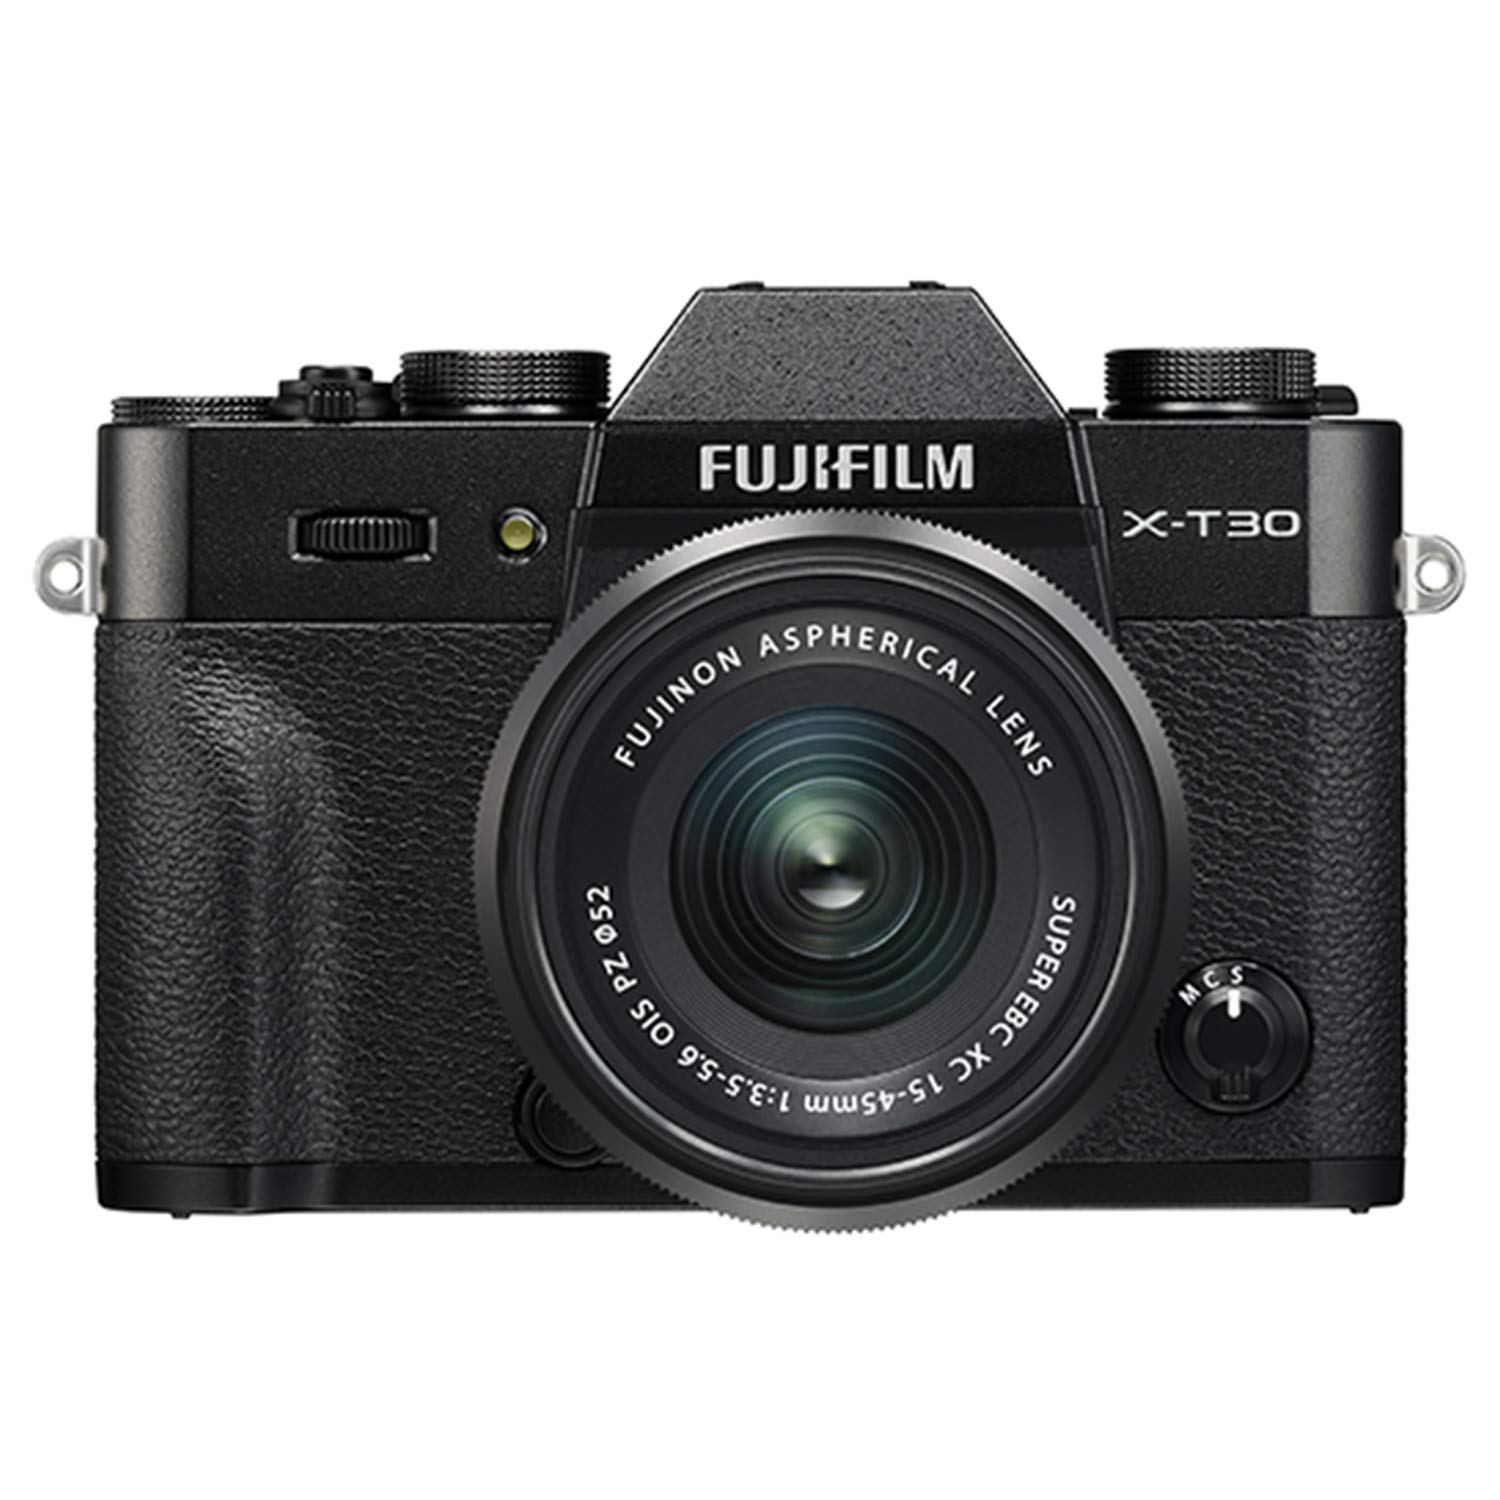 Fujifilm X-T30 Mirrorless Camera with XC 15-45mm f/3.5-5.6 OIS PZ Lens - Black